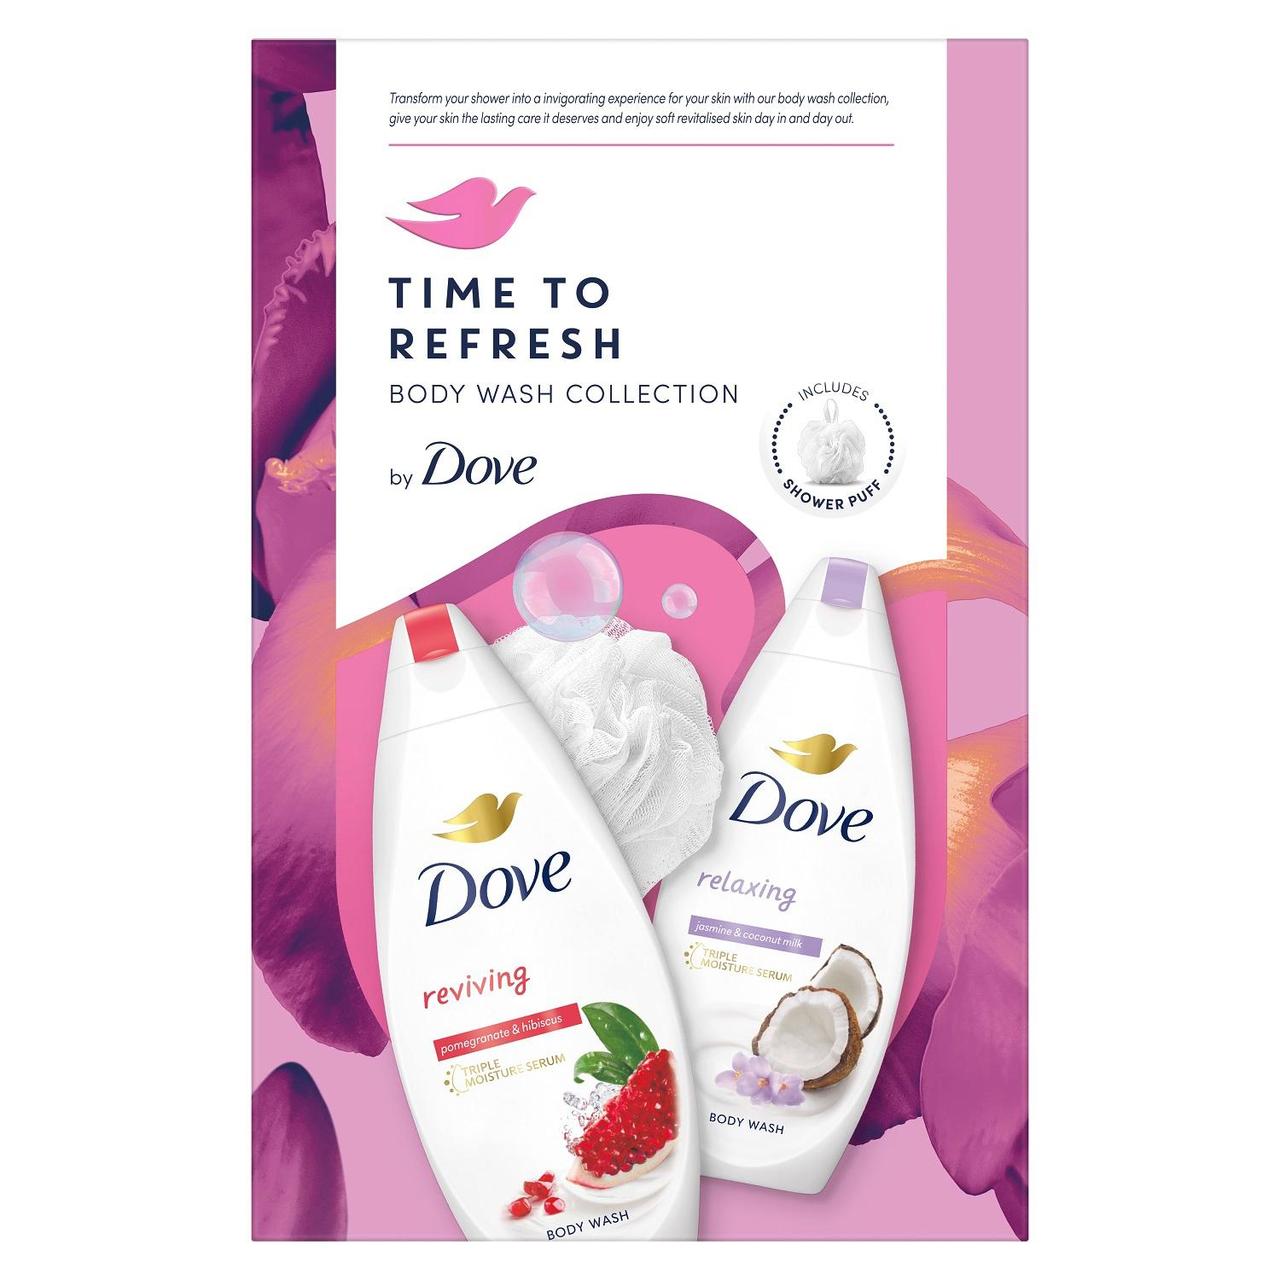 Dove Silk Glow Body Wash Shower Gel 450ml - Tesco Groceries